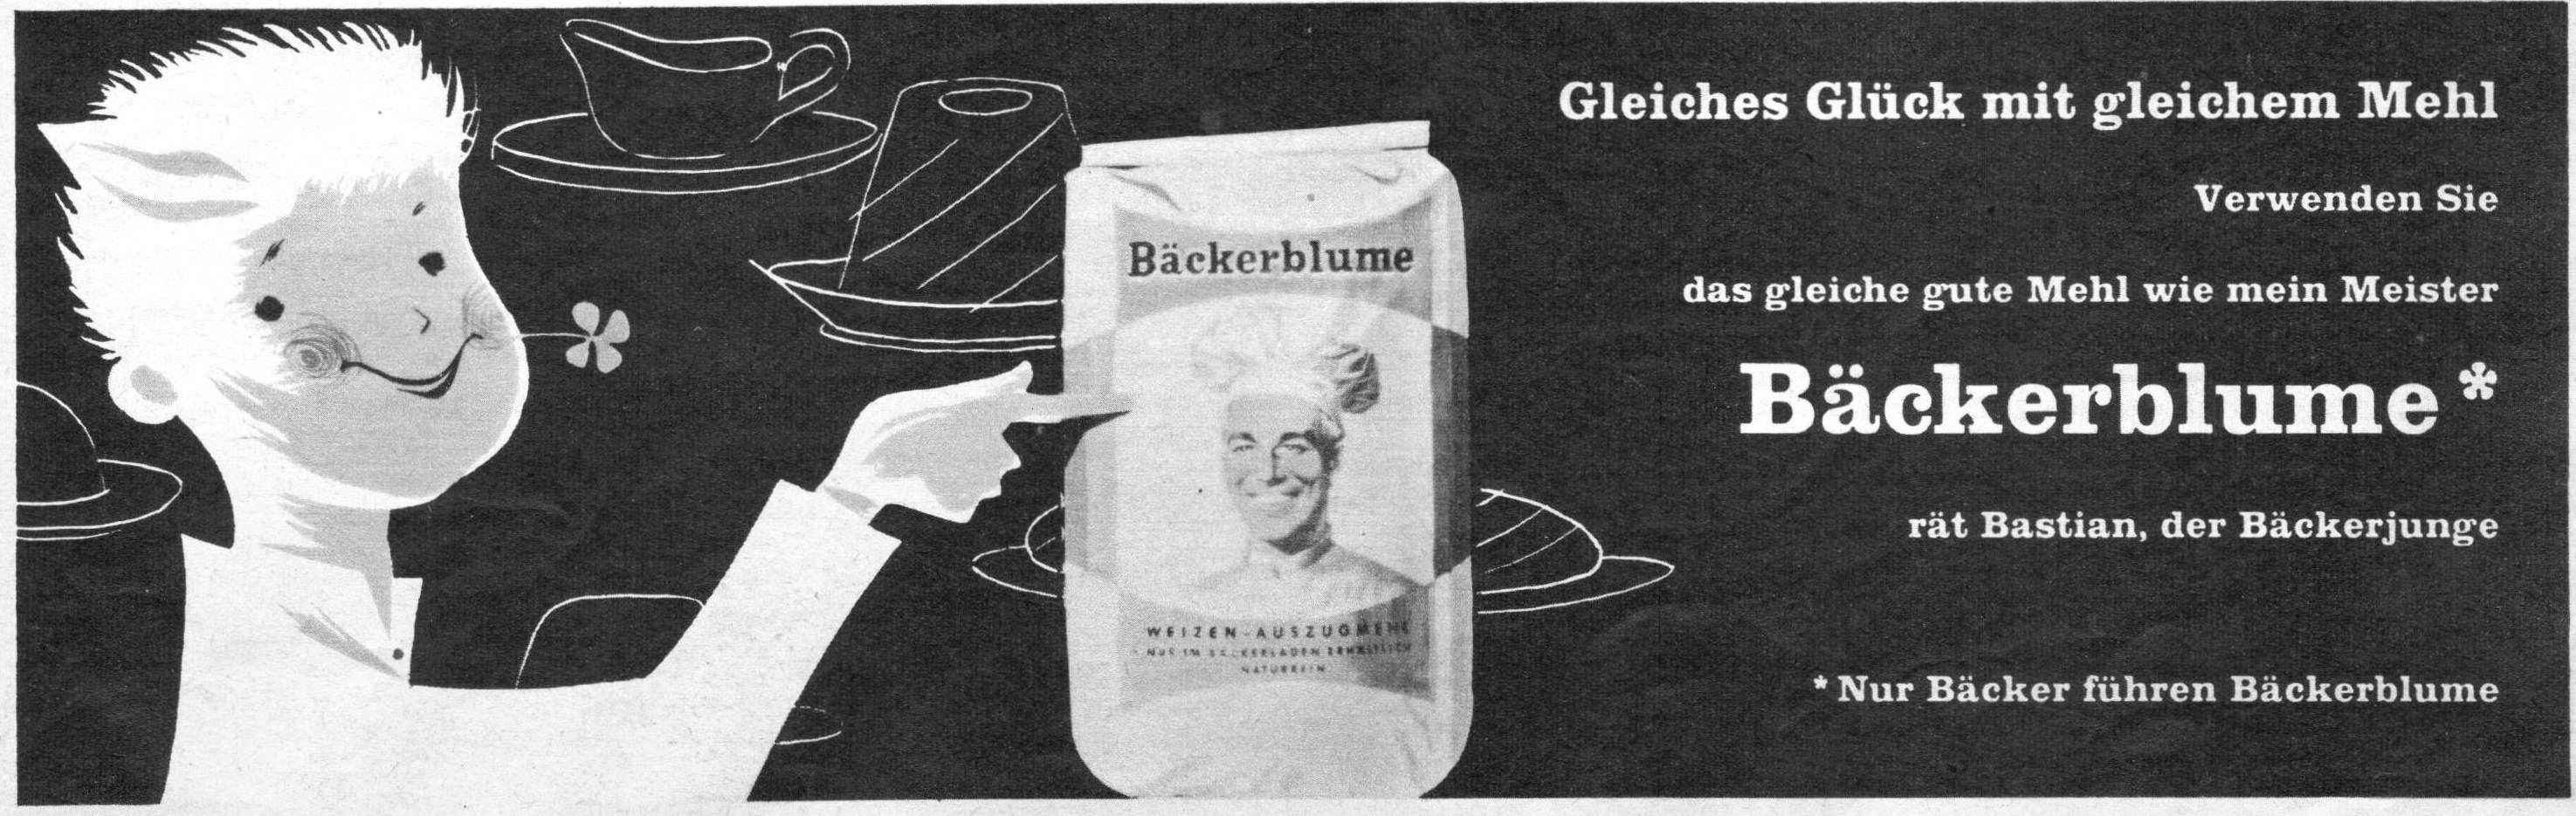 Baeckerblume 1959 193.jpg